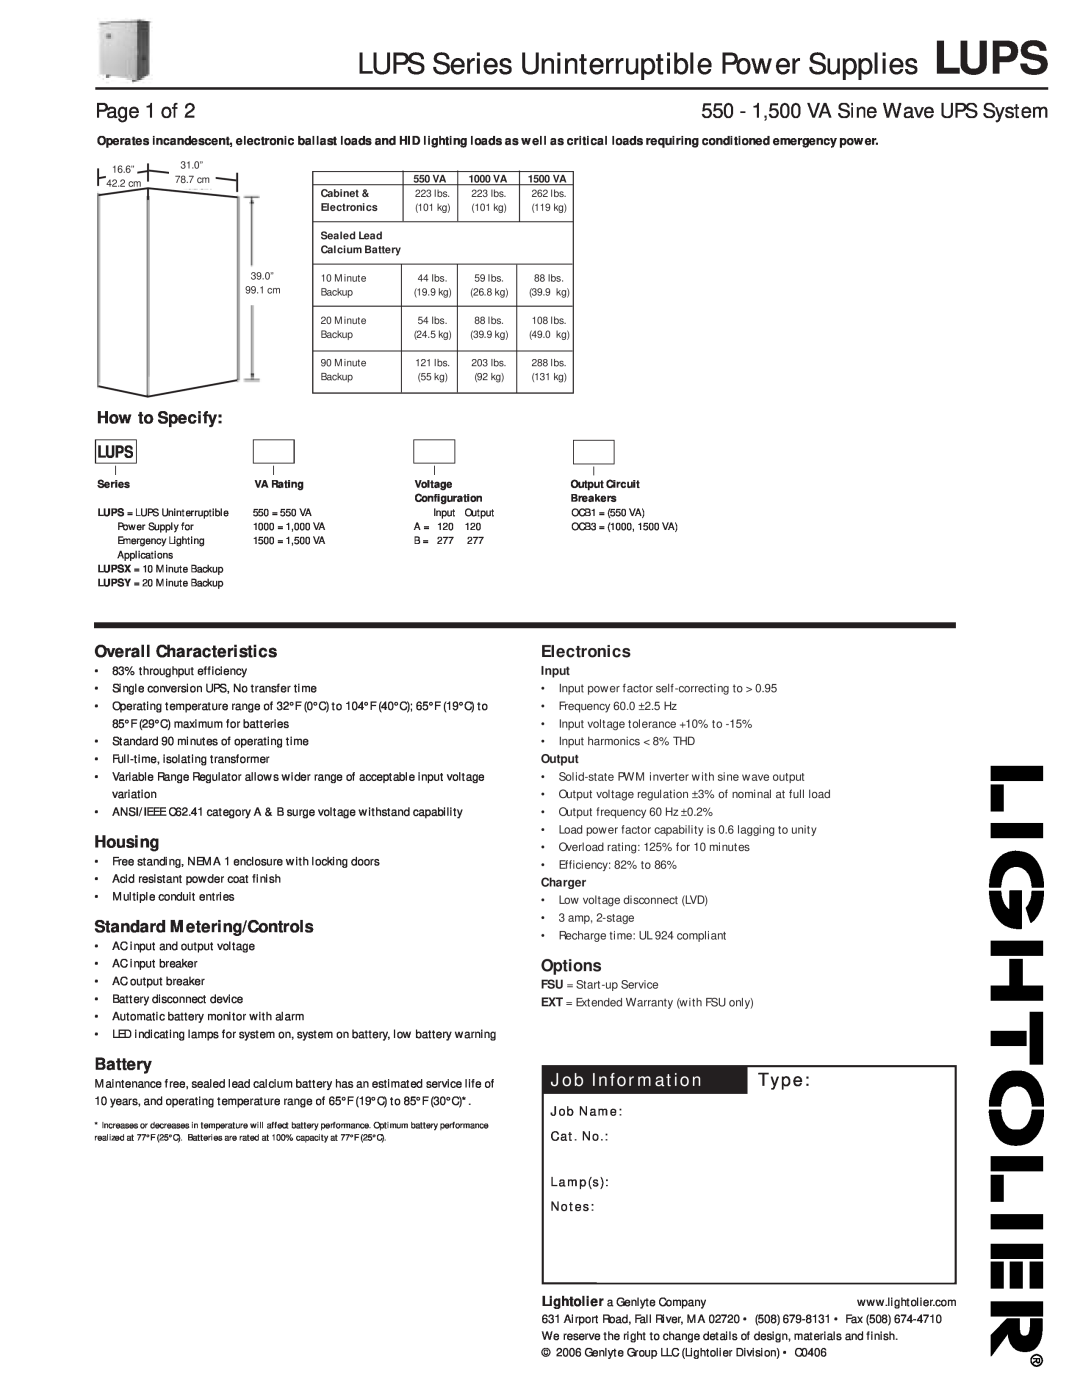 Lightolier warranty LUPS Series Uninterruptible Power Supplies LUPS, 550 - 1,500 VA Sine Wave UPS System, Housing, Type 